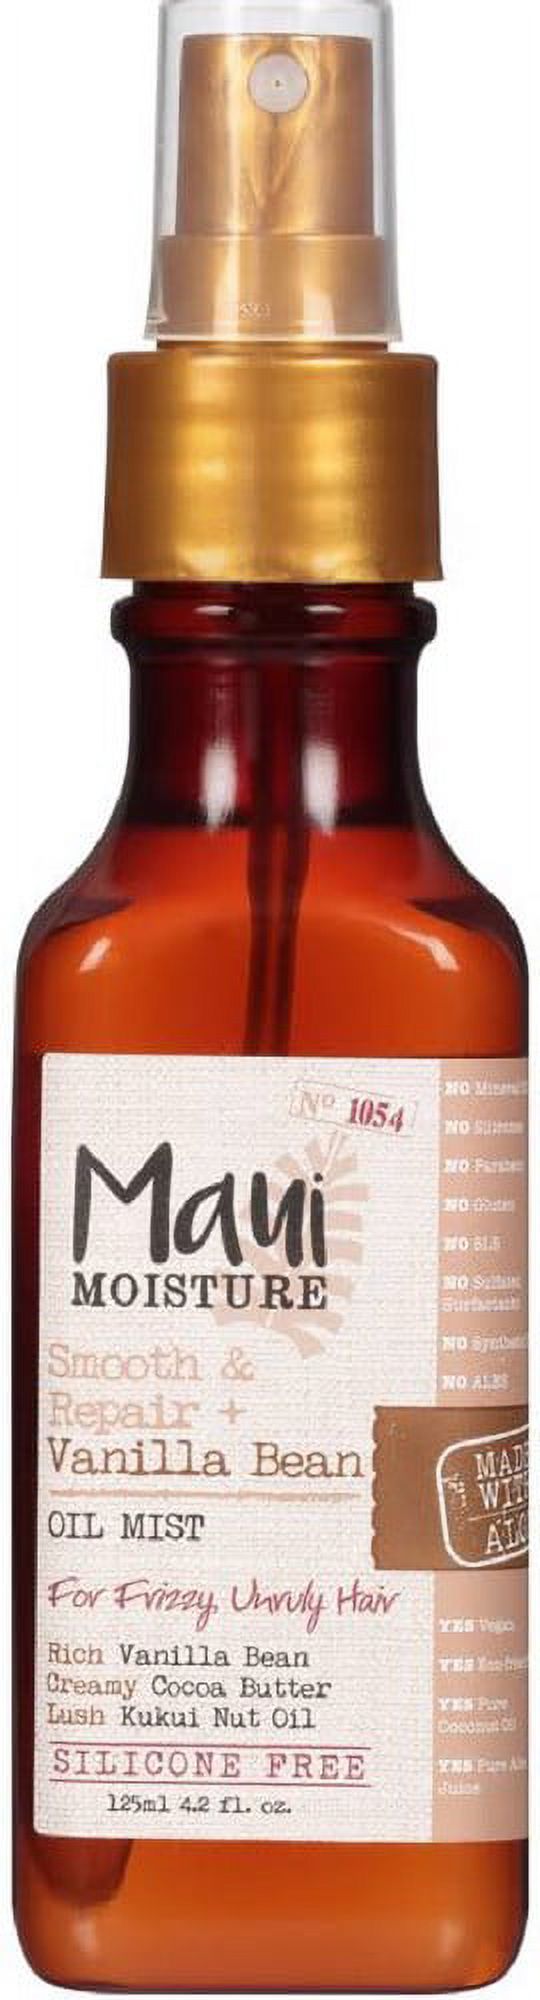 Maui Moisture Smooth and Repair + Vanilla Bean Oil Mist 4.2 oz - image 1 of 8